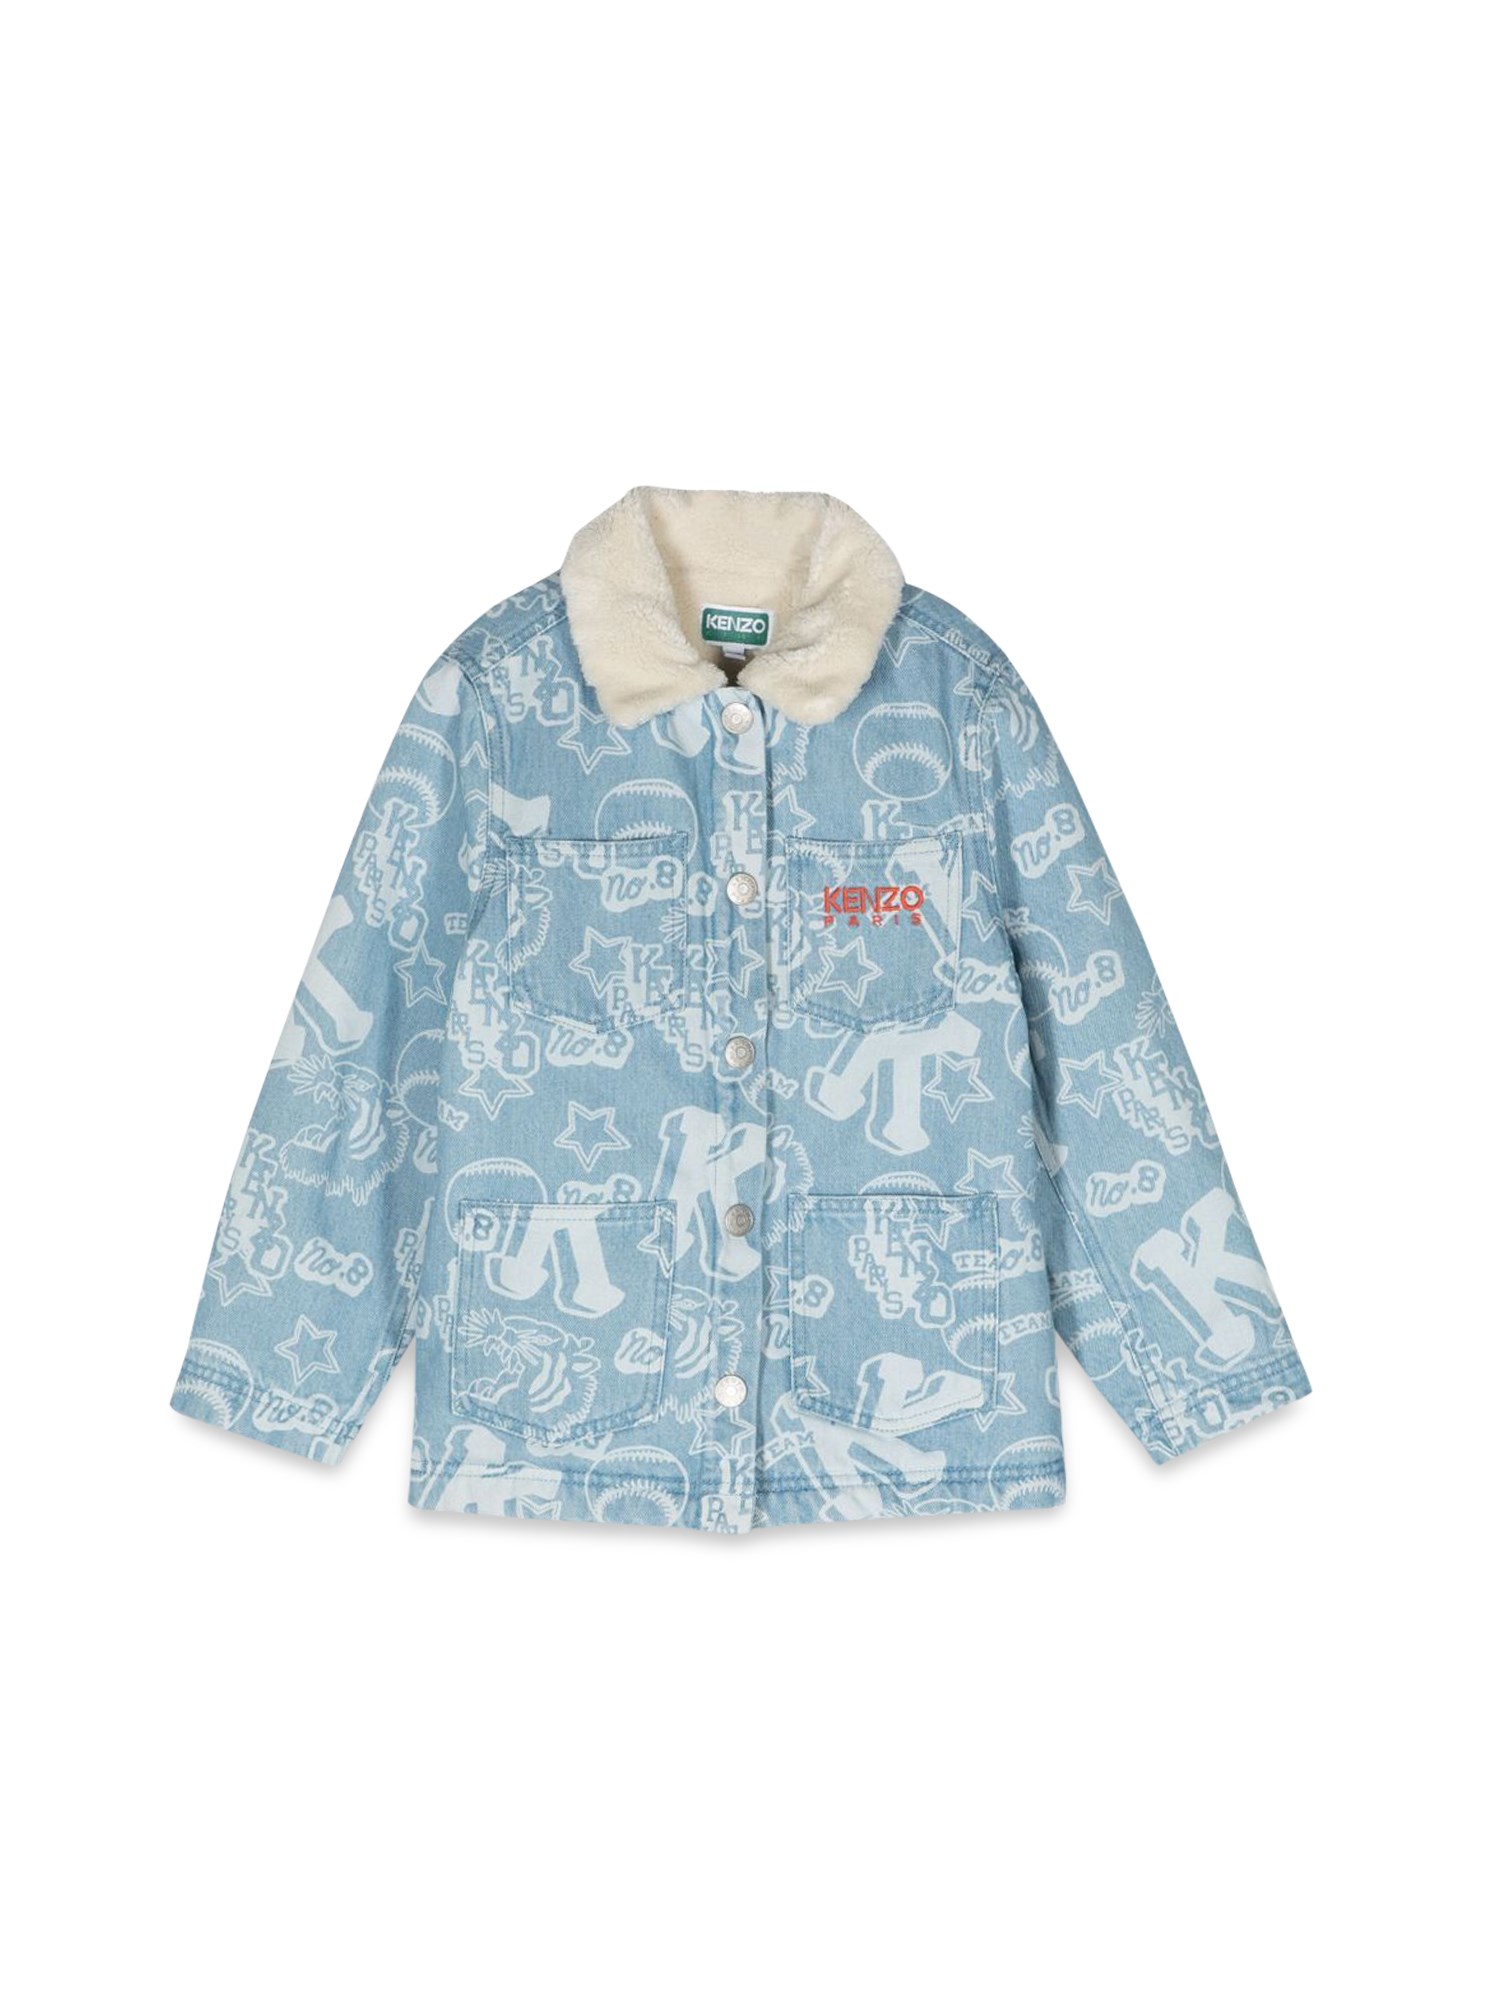 kenzo patterned denim jacket